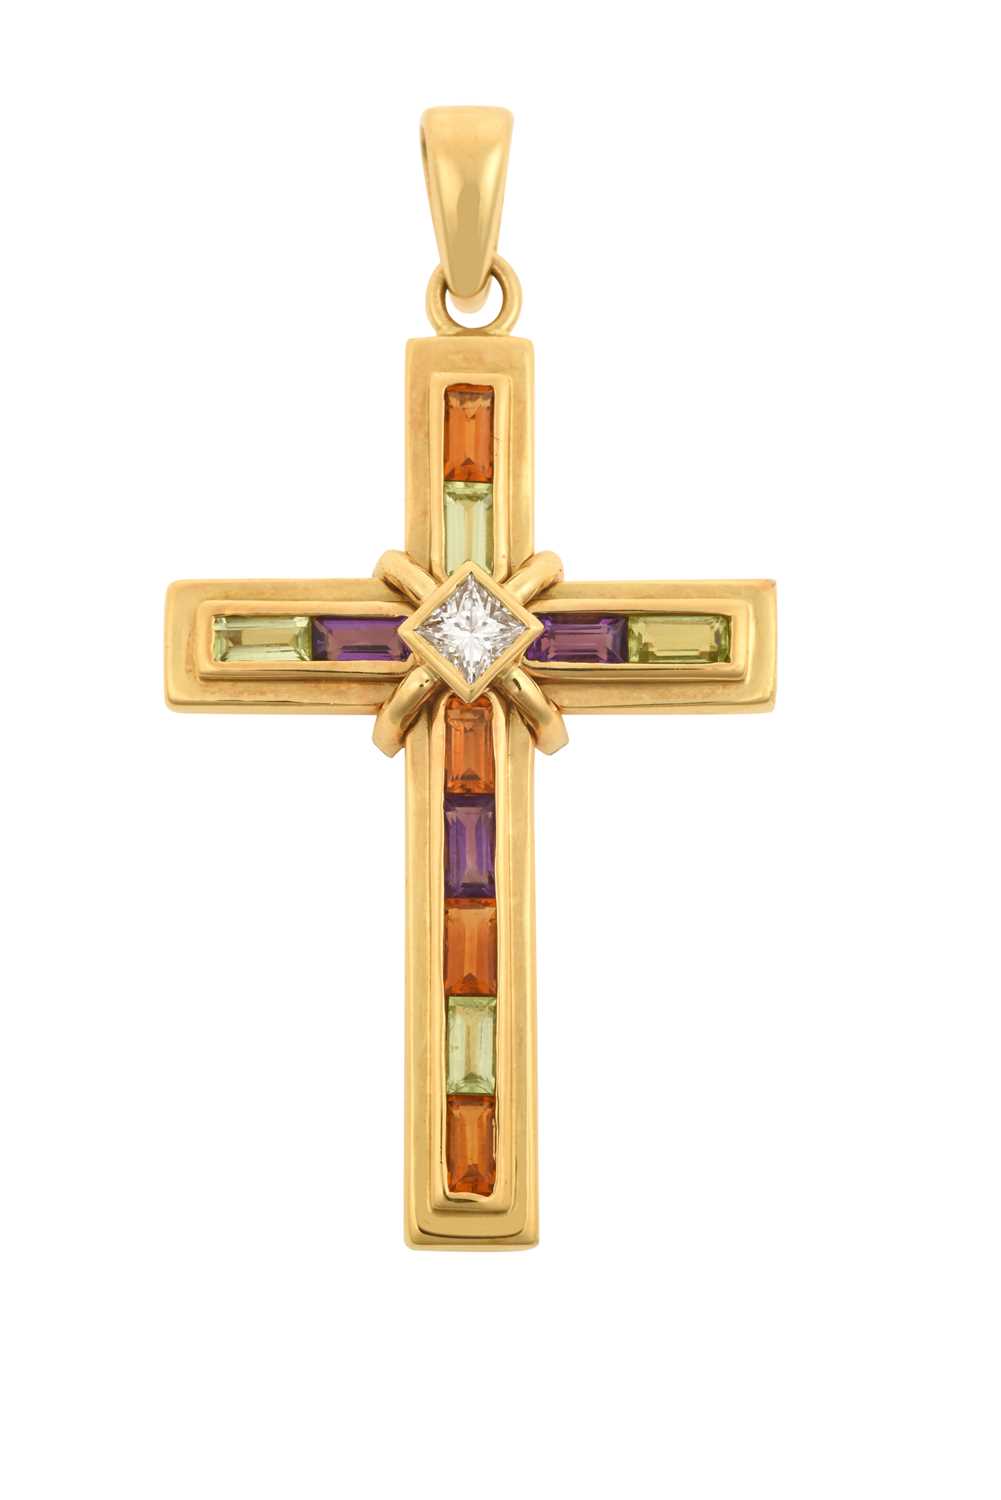 A Multi-Gem Set Cross Pendant, by Catherine Best the cross motif set throughout with baguette cut